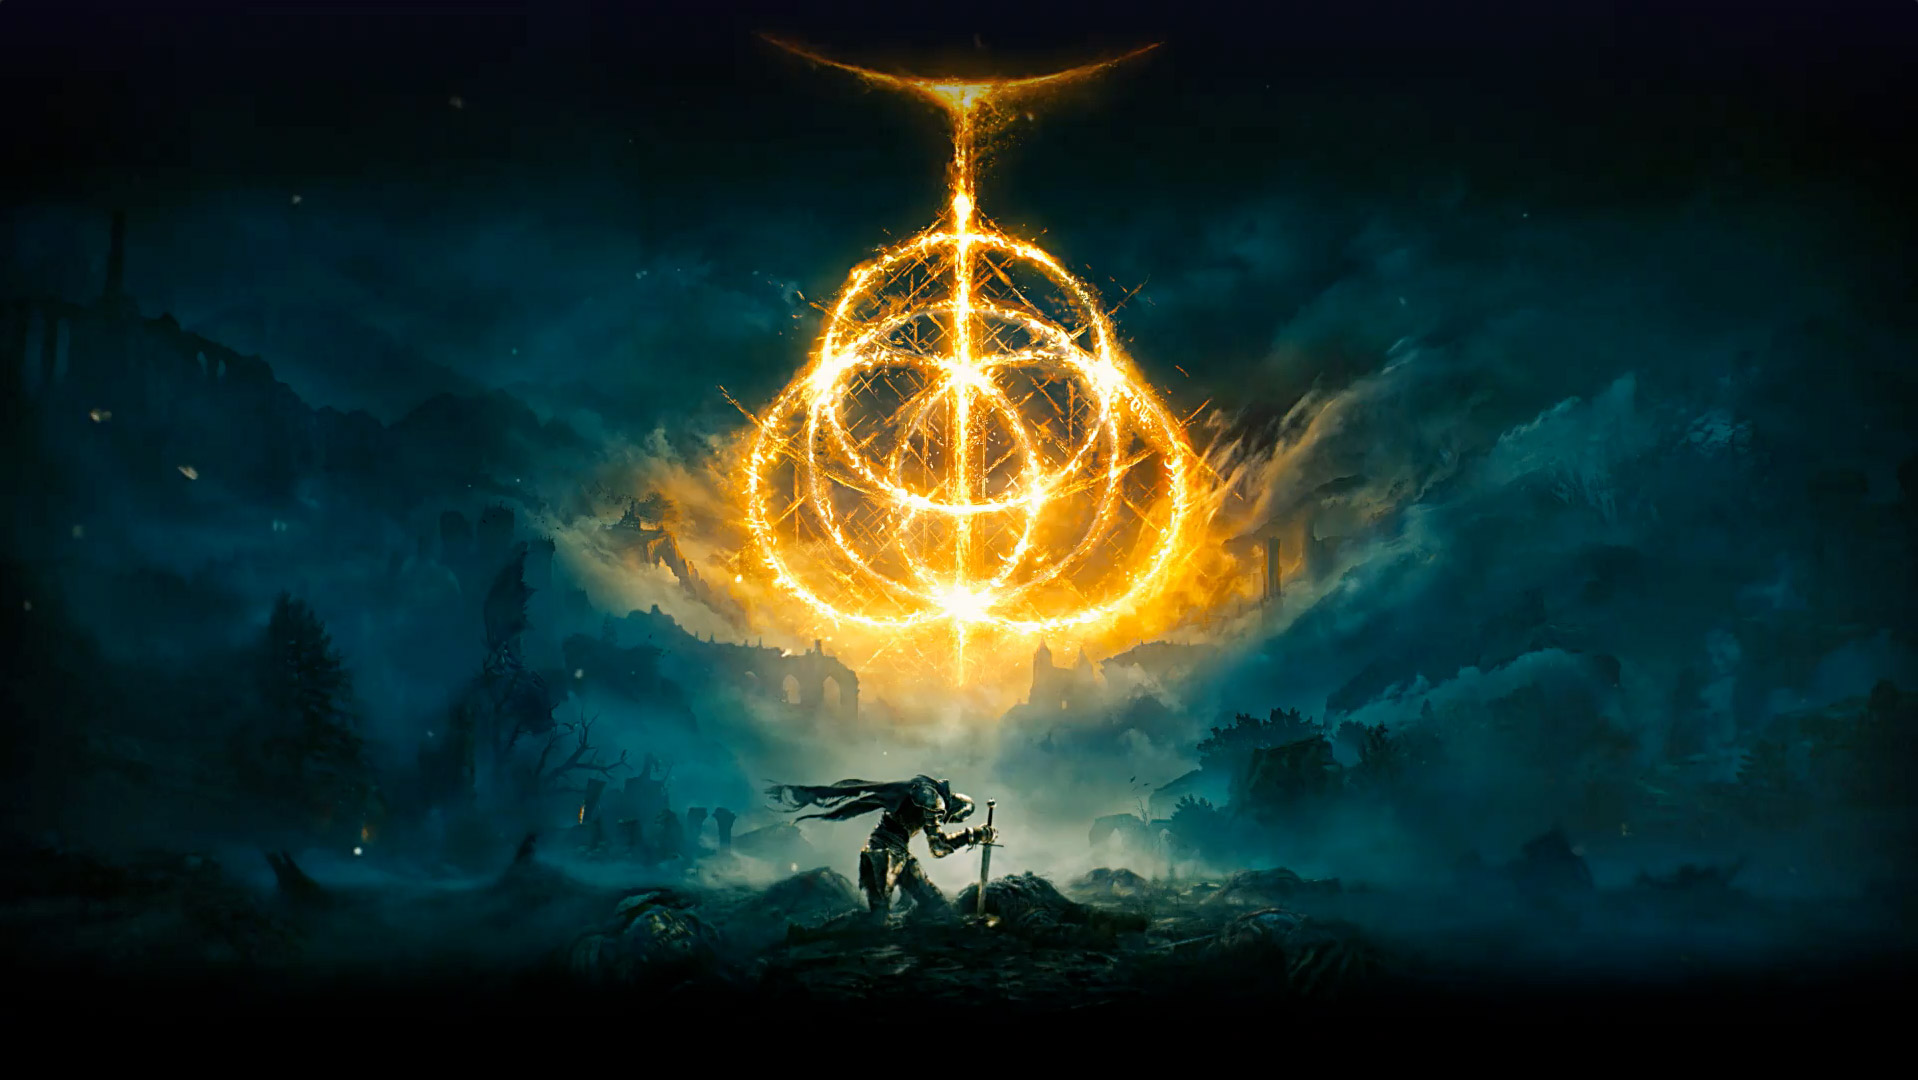 Elden Ring多個燃燒著的戒指組成 Elden Ring 符號。在荒蕪、濃霧的區域，騎士角色與立於地面的劍。